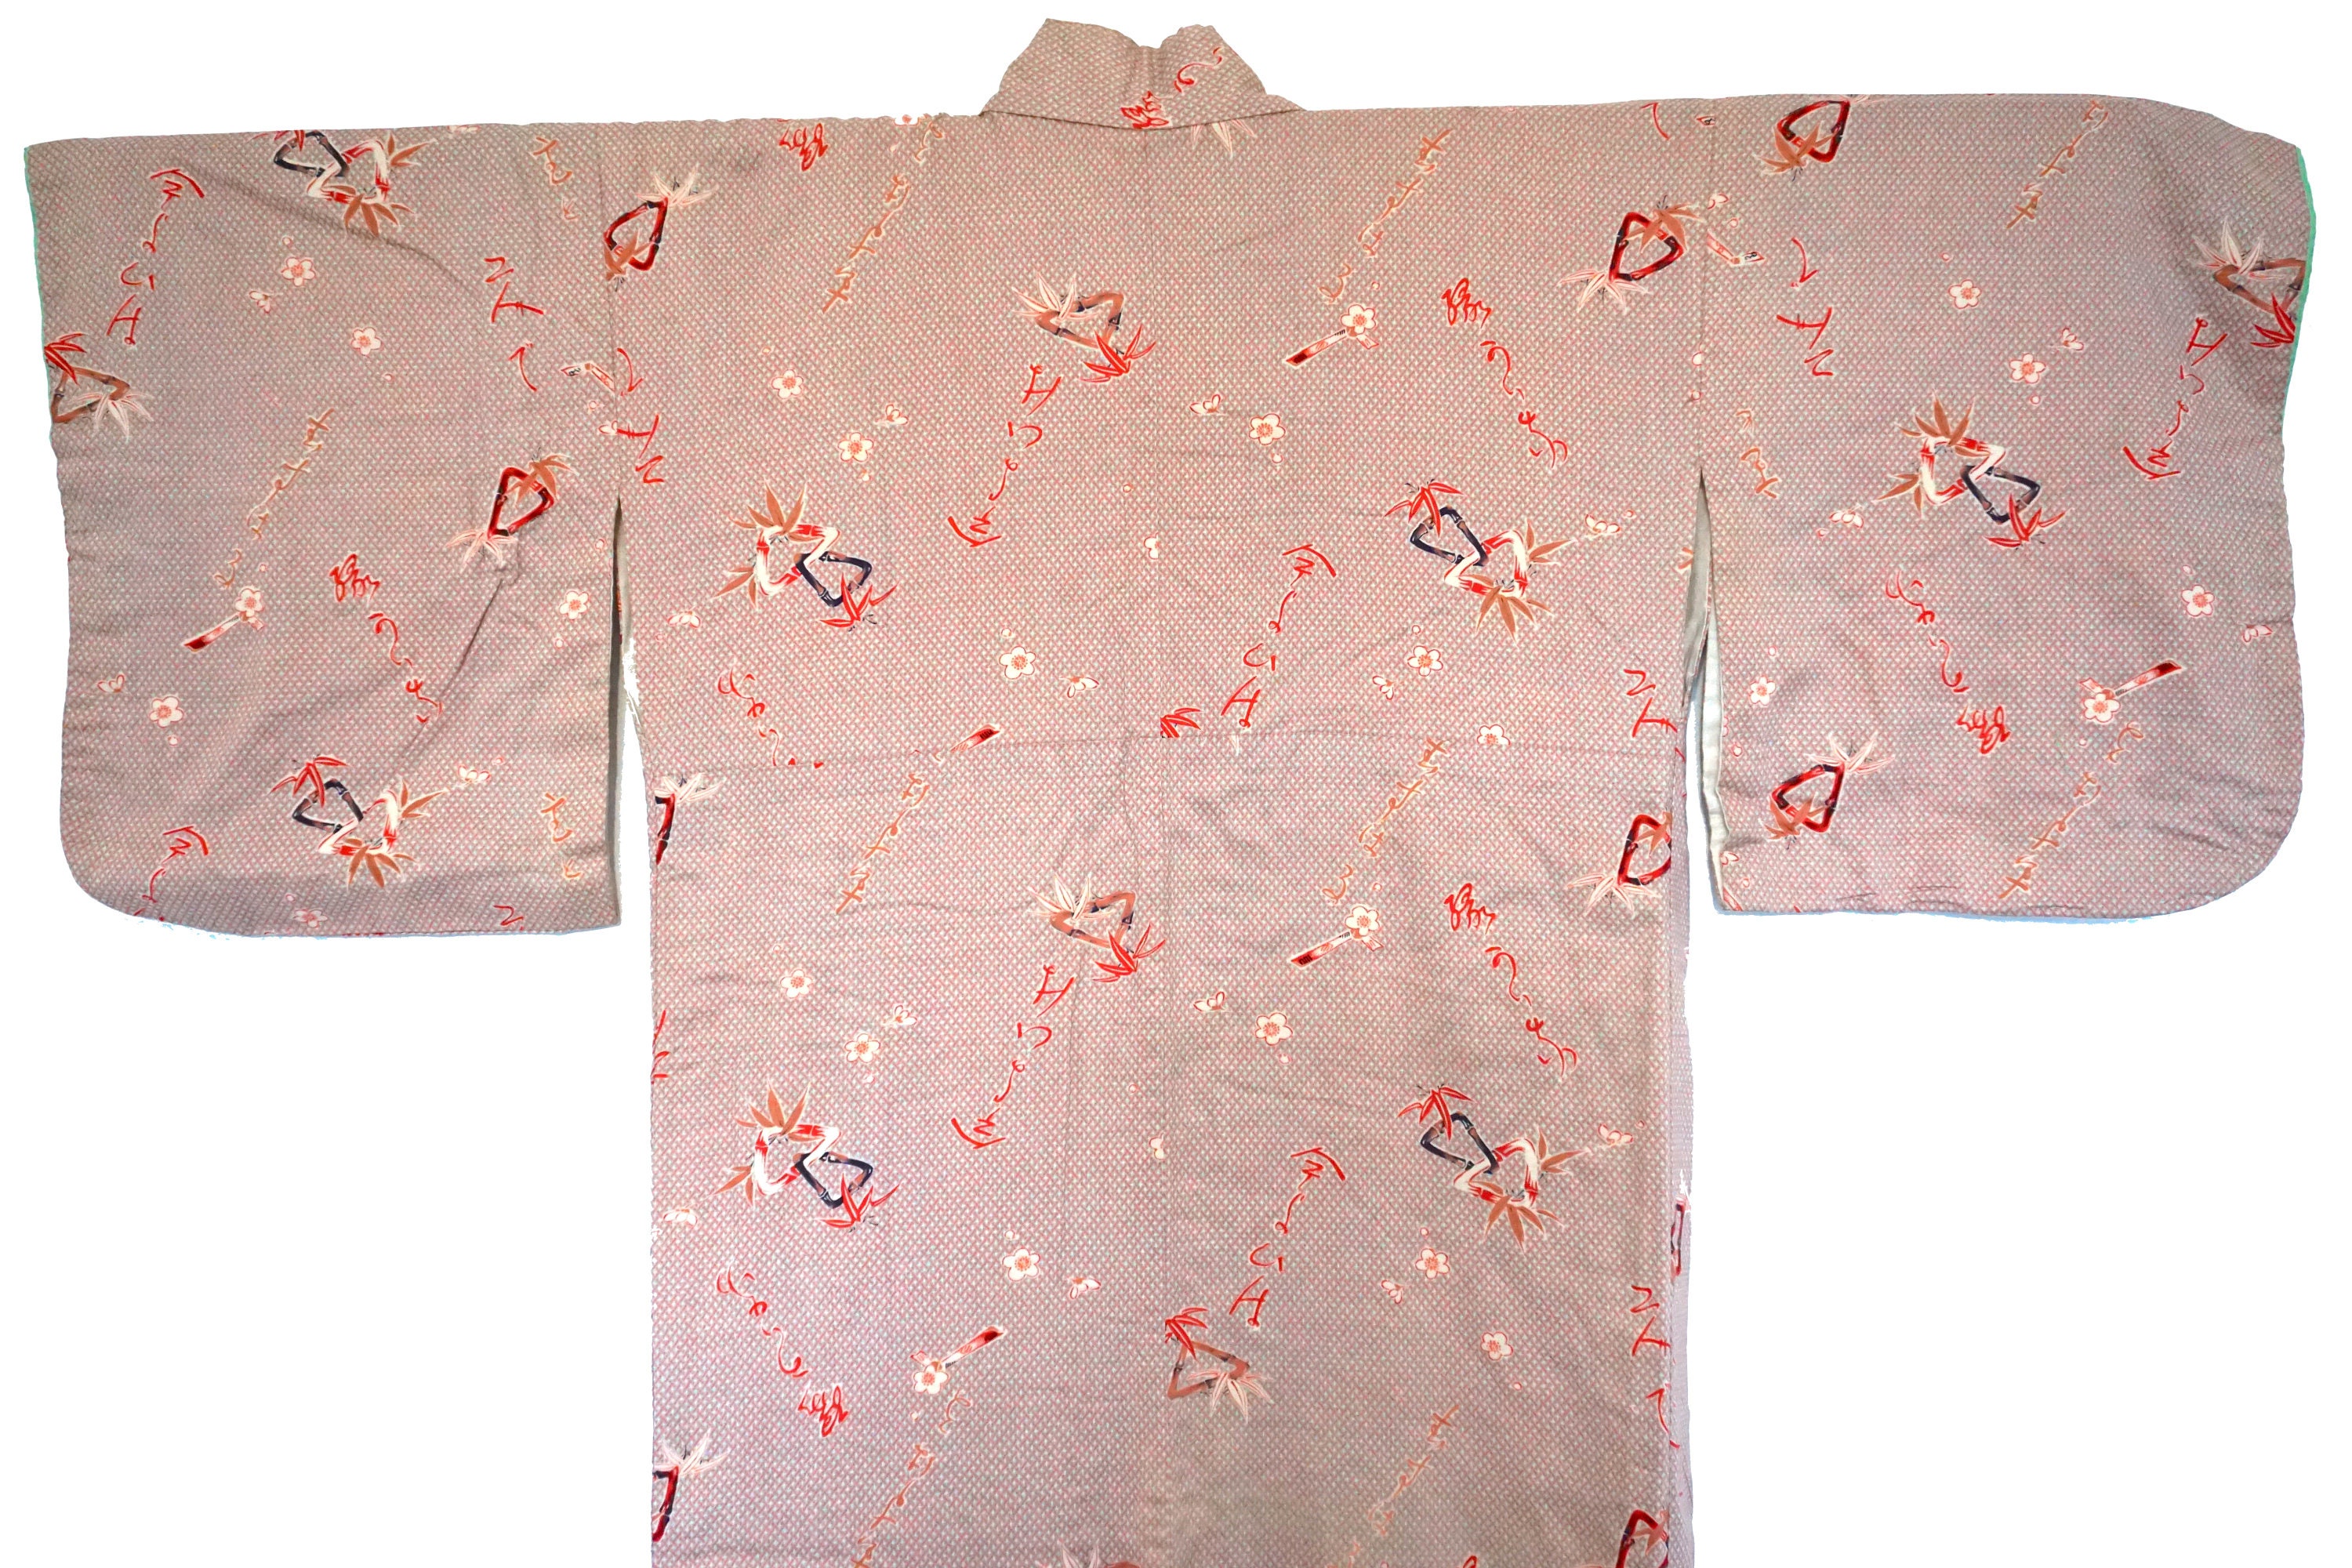 Vintage Japanese Kimono 689 | Etsy